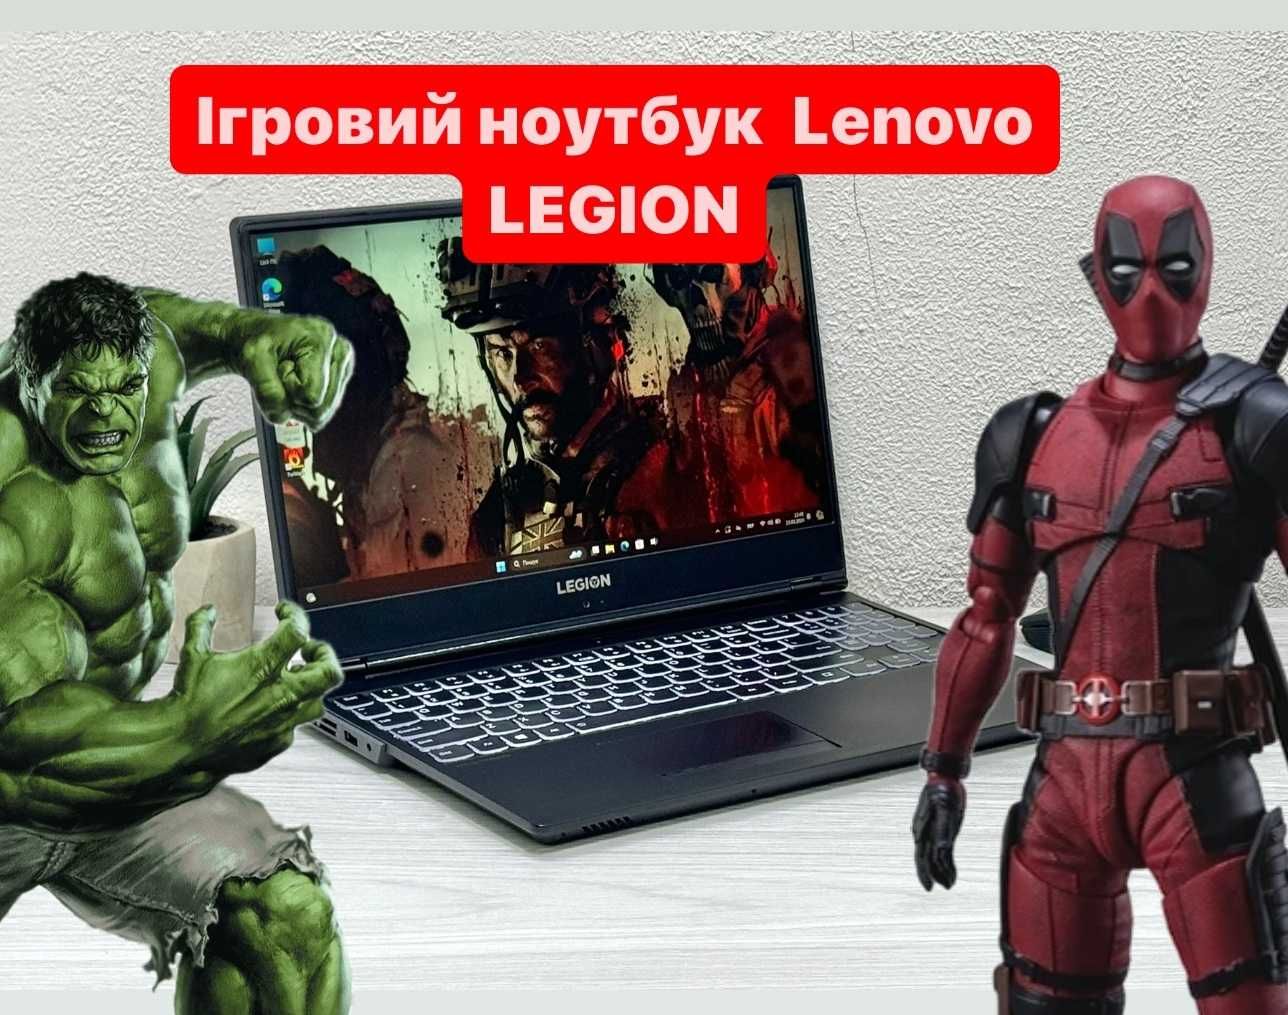 Lenovo Legion Y540-15irh (i7-9750H, Rtx 2060) / Є оплата ЧАСТИНАМИ